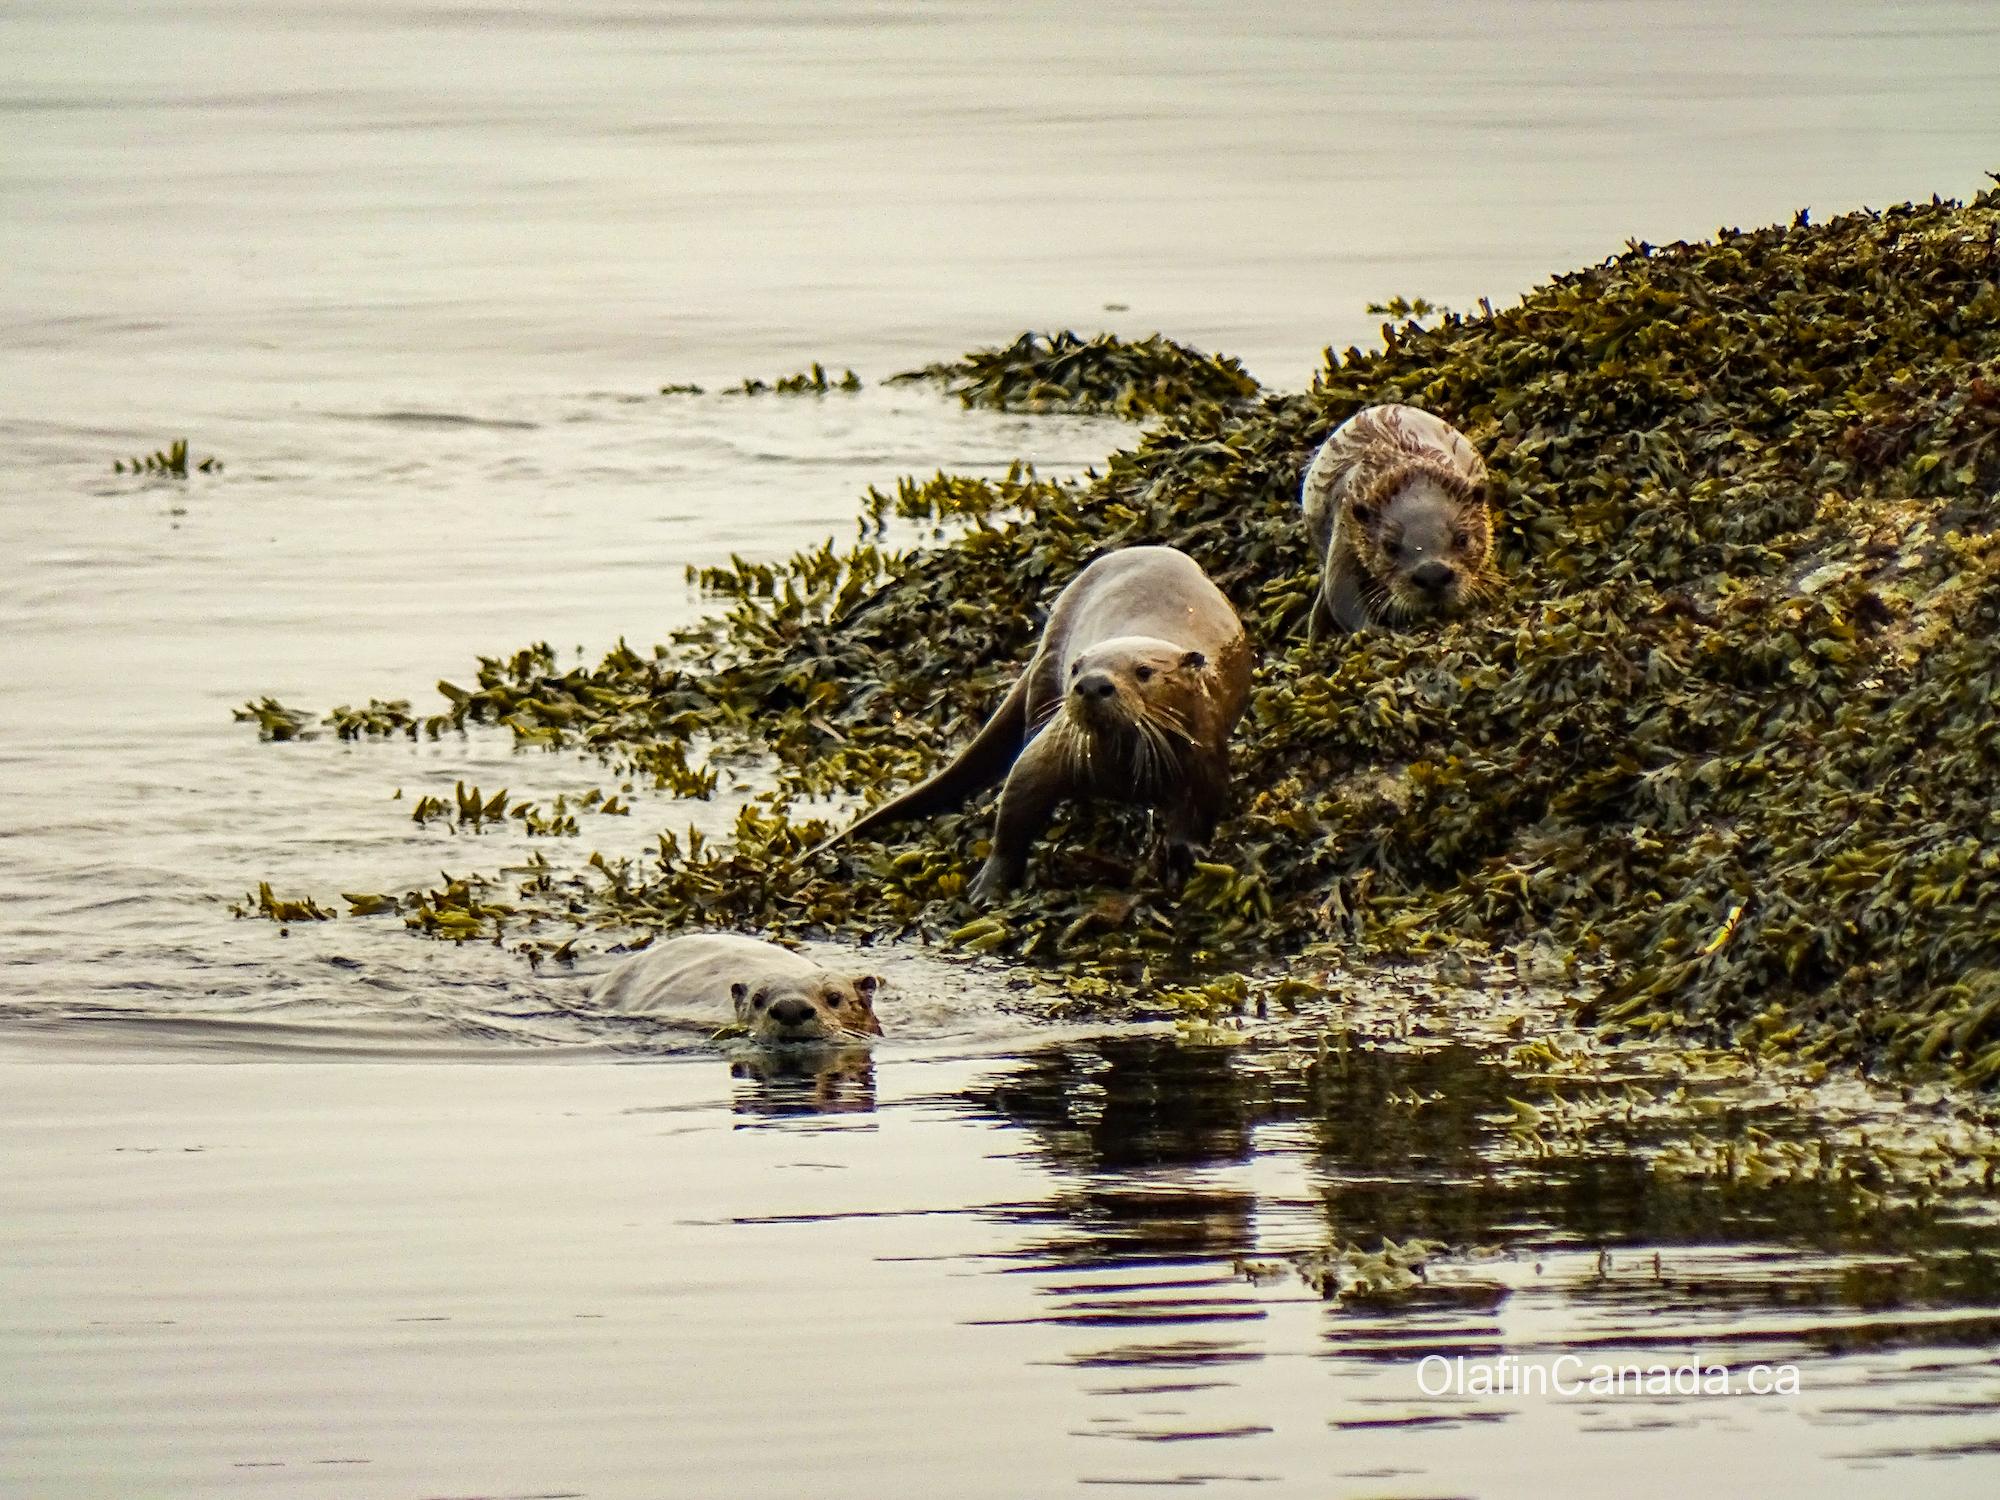 River otters playing on the shore near Victoria #olafincanada #britishcolumbia #discoverbc #wildlife #victoria #otter